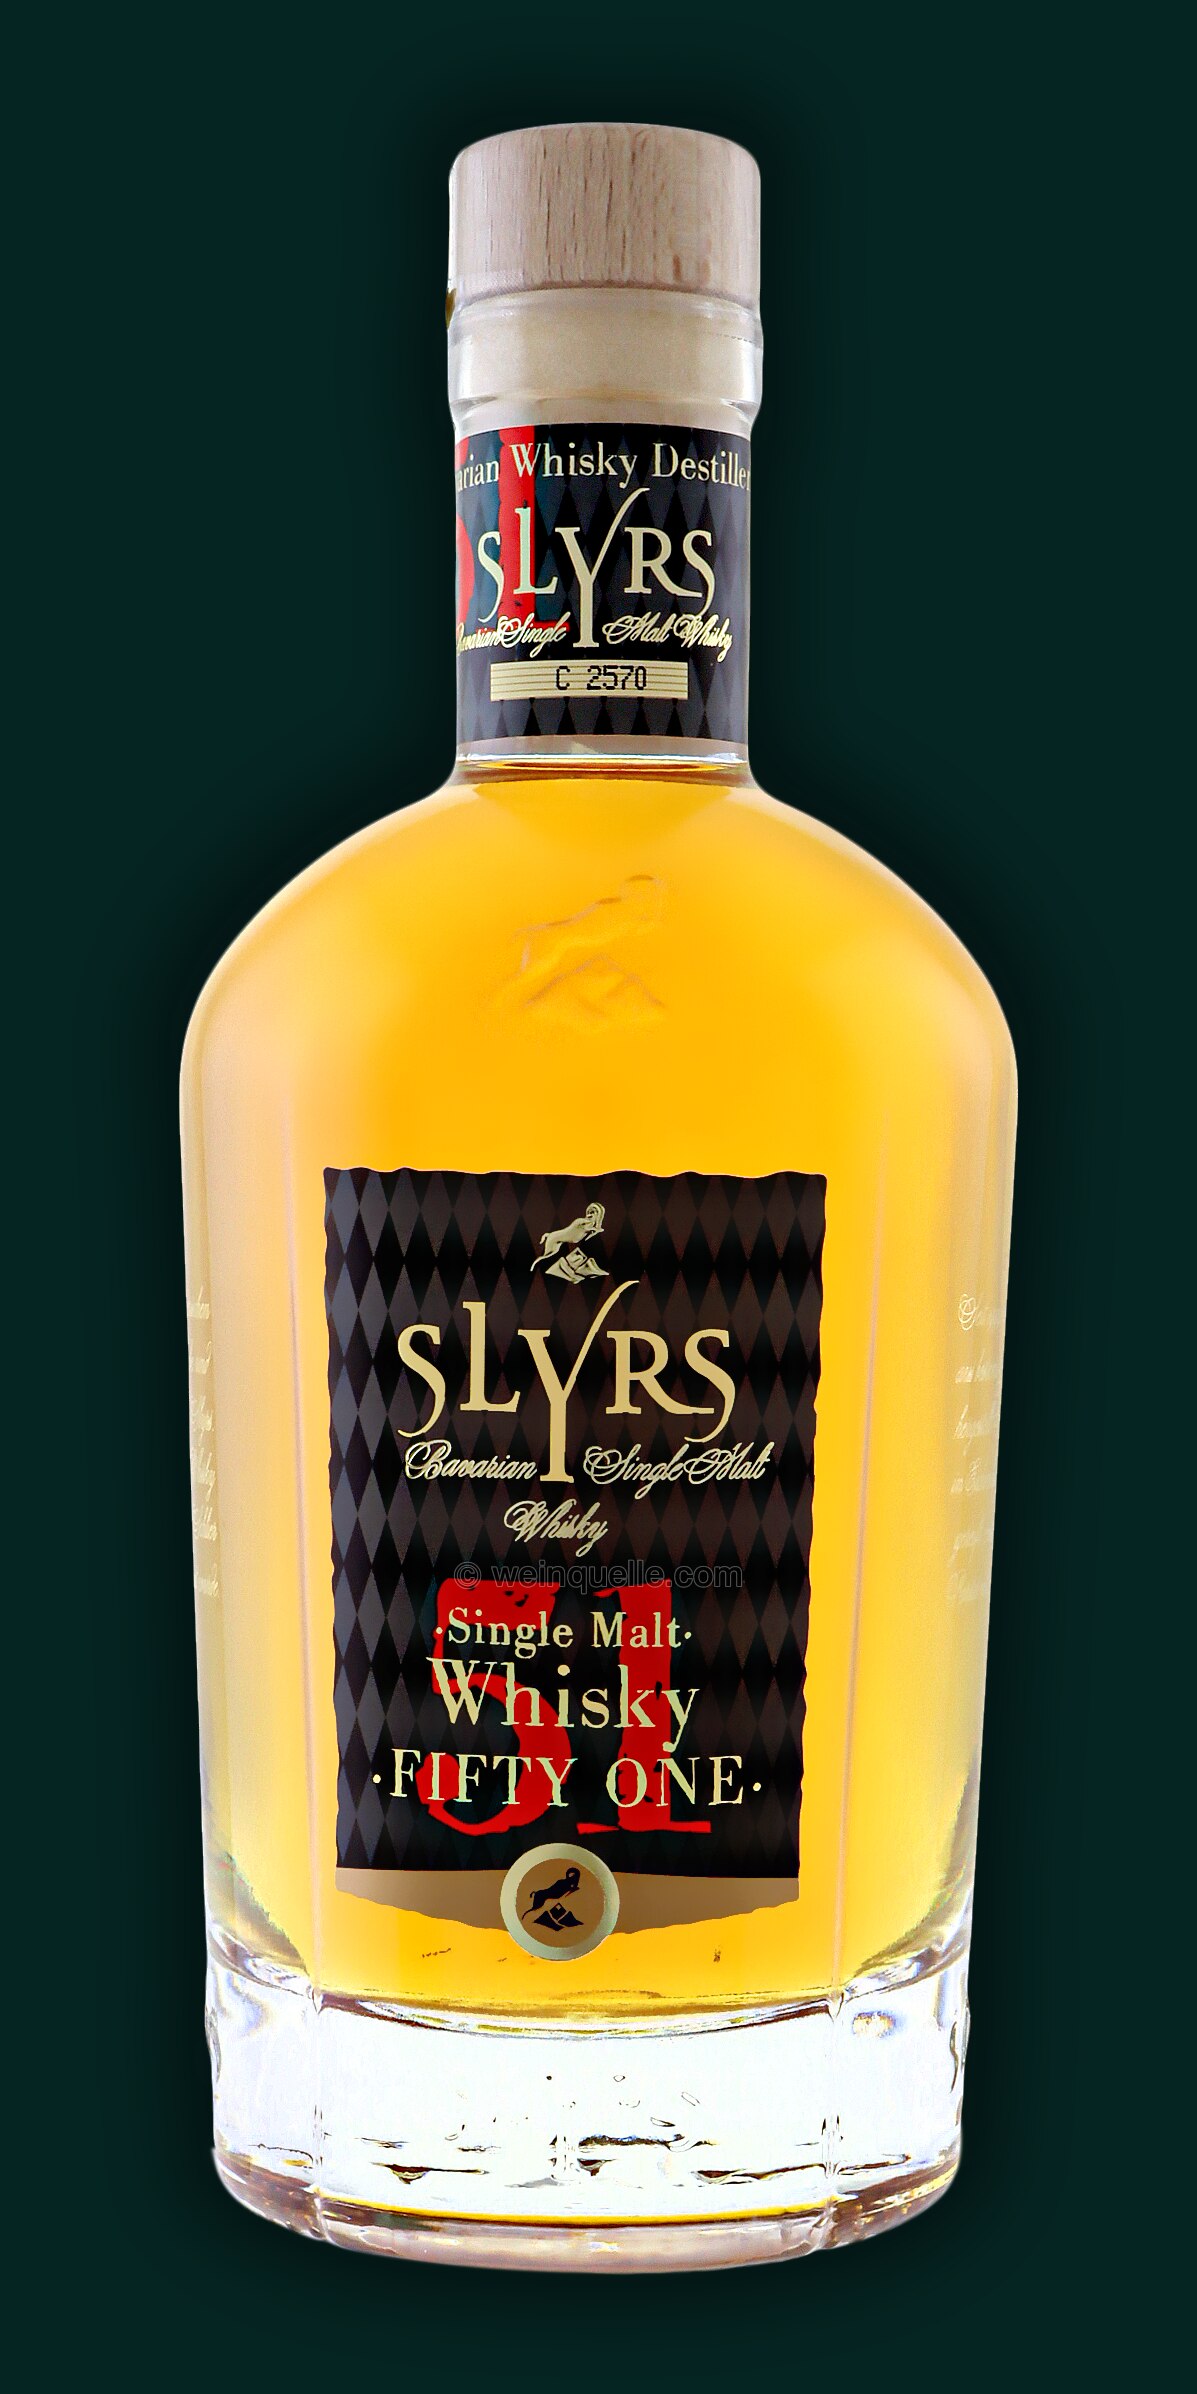 Slyrs Bavarian Single Malt Whisky 51% Liter, 39,95 Weinquelle 0,35 Lühmann - Fifty-One €